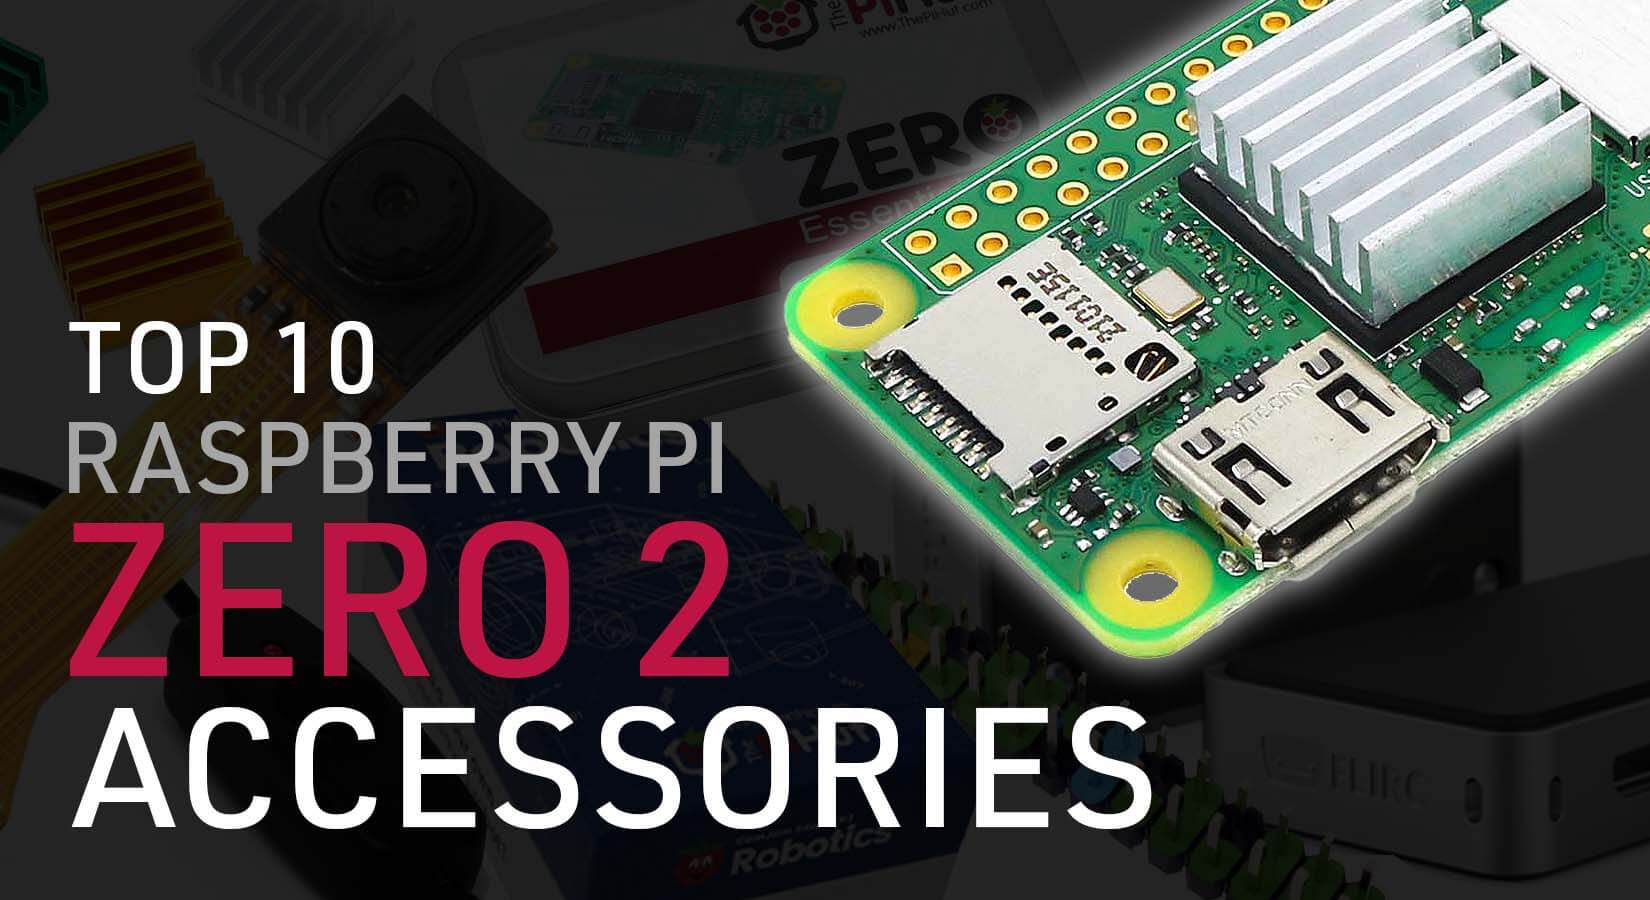 Tudo sobre o Raspberry Pi Zero 2 W